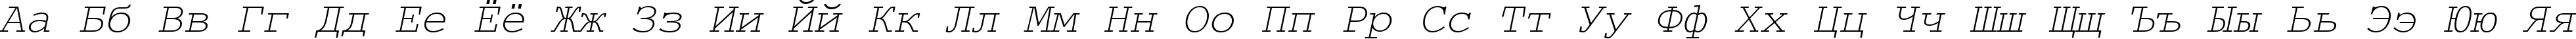 Пример написания русского алфавита шрифтом CourierMCY Oblique